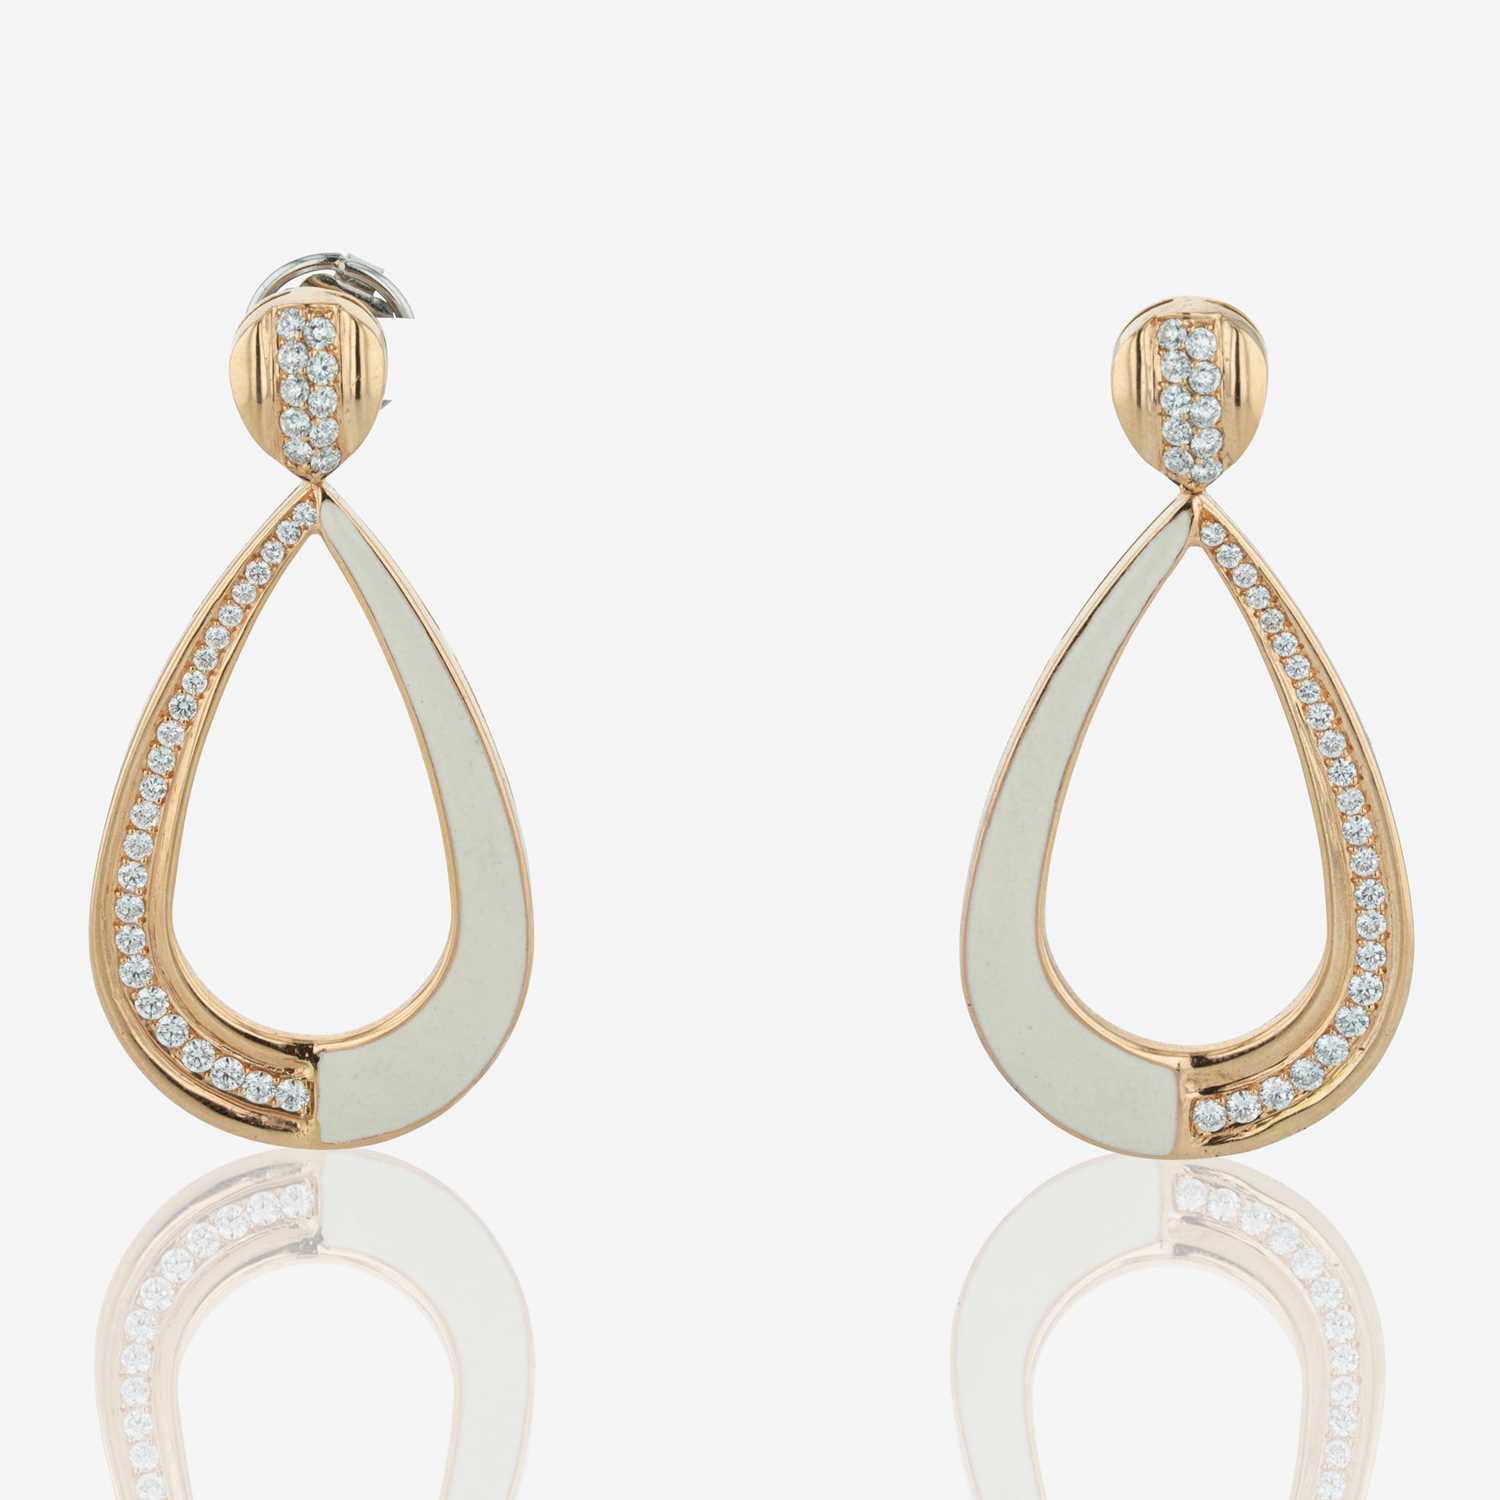 Lot 229 - A Pair of Damaso Gold, Diamond, and Enamel Earrings